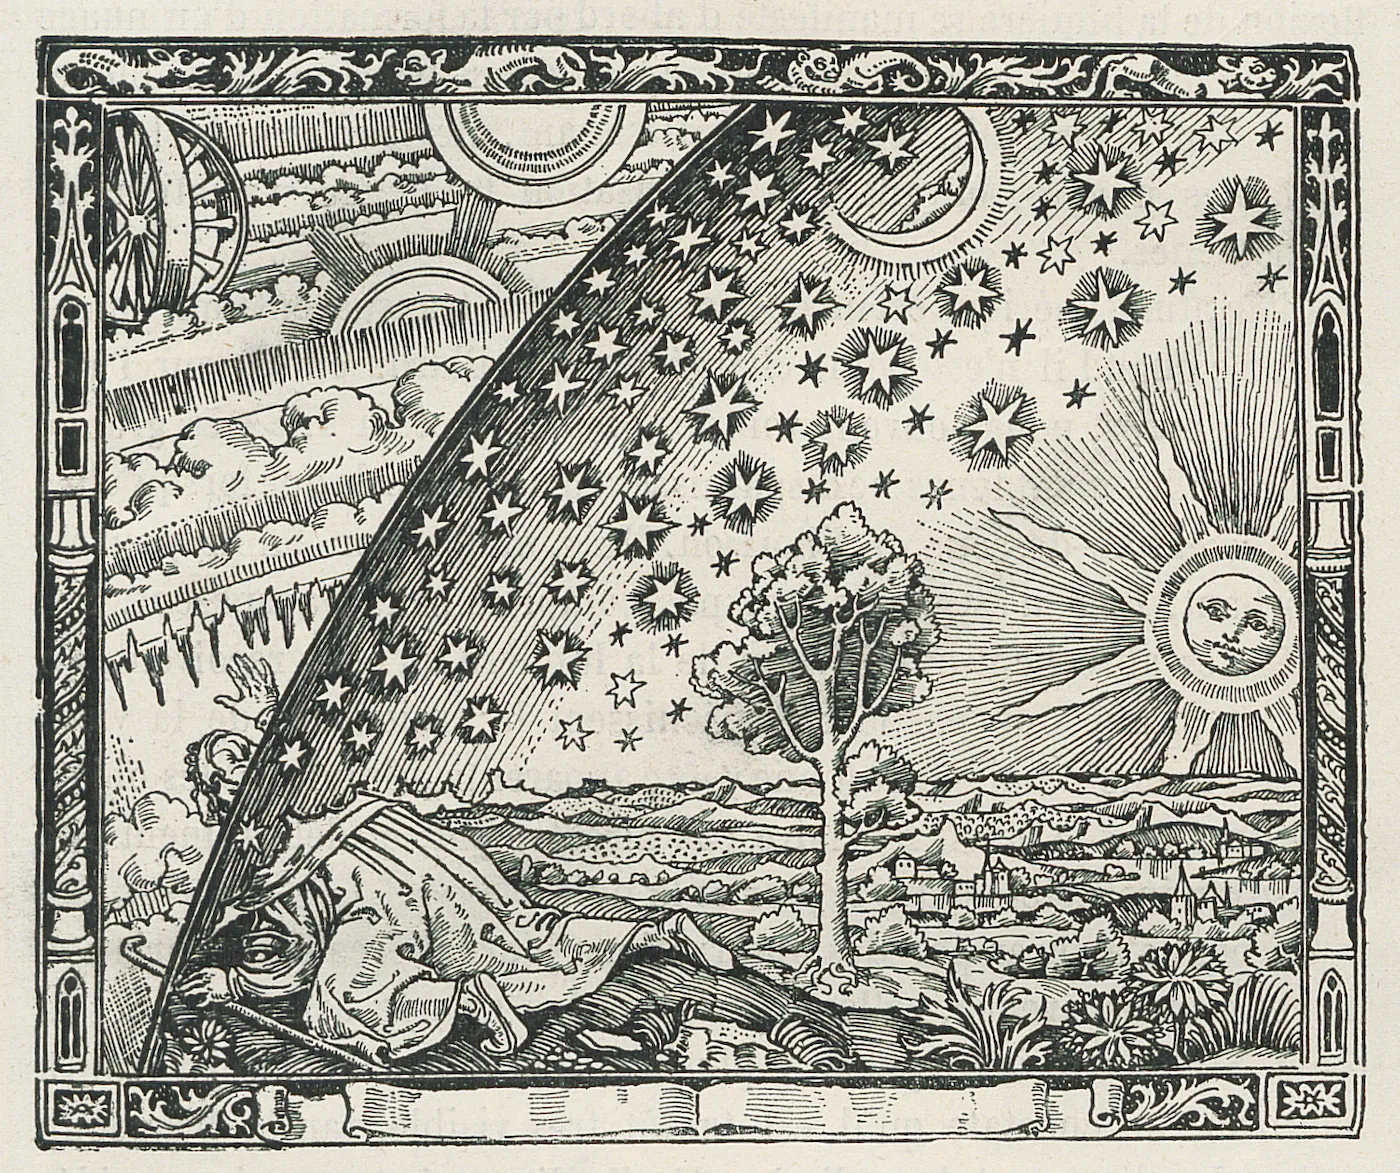 "Flammarion Engraving" (ca. 1888)